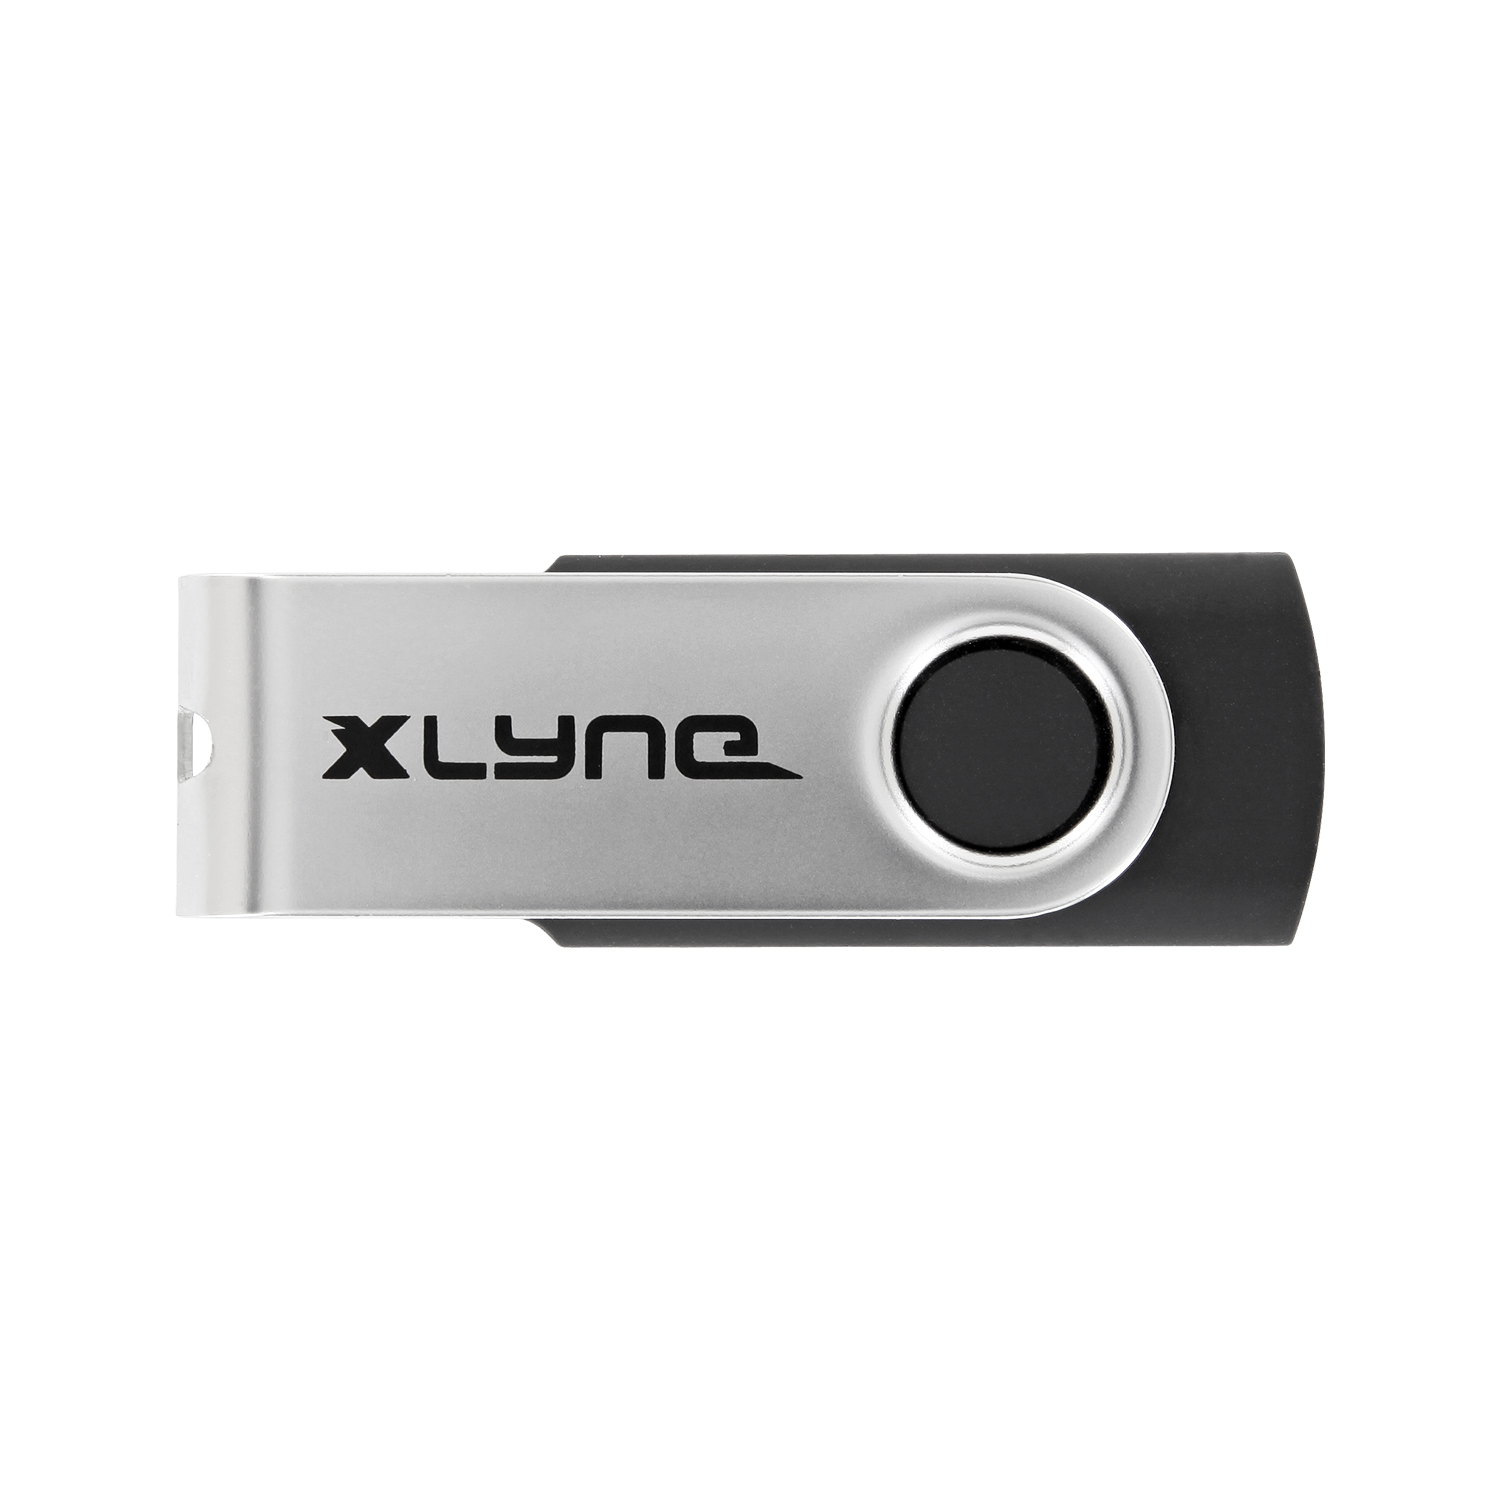 XLYNE USB 3.0 (SCHWARZ Stick GB SILBER, USB 128 - 128 GB) 